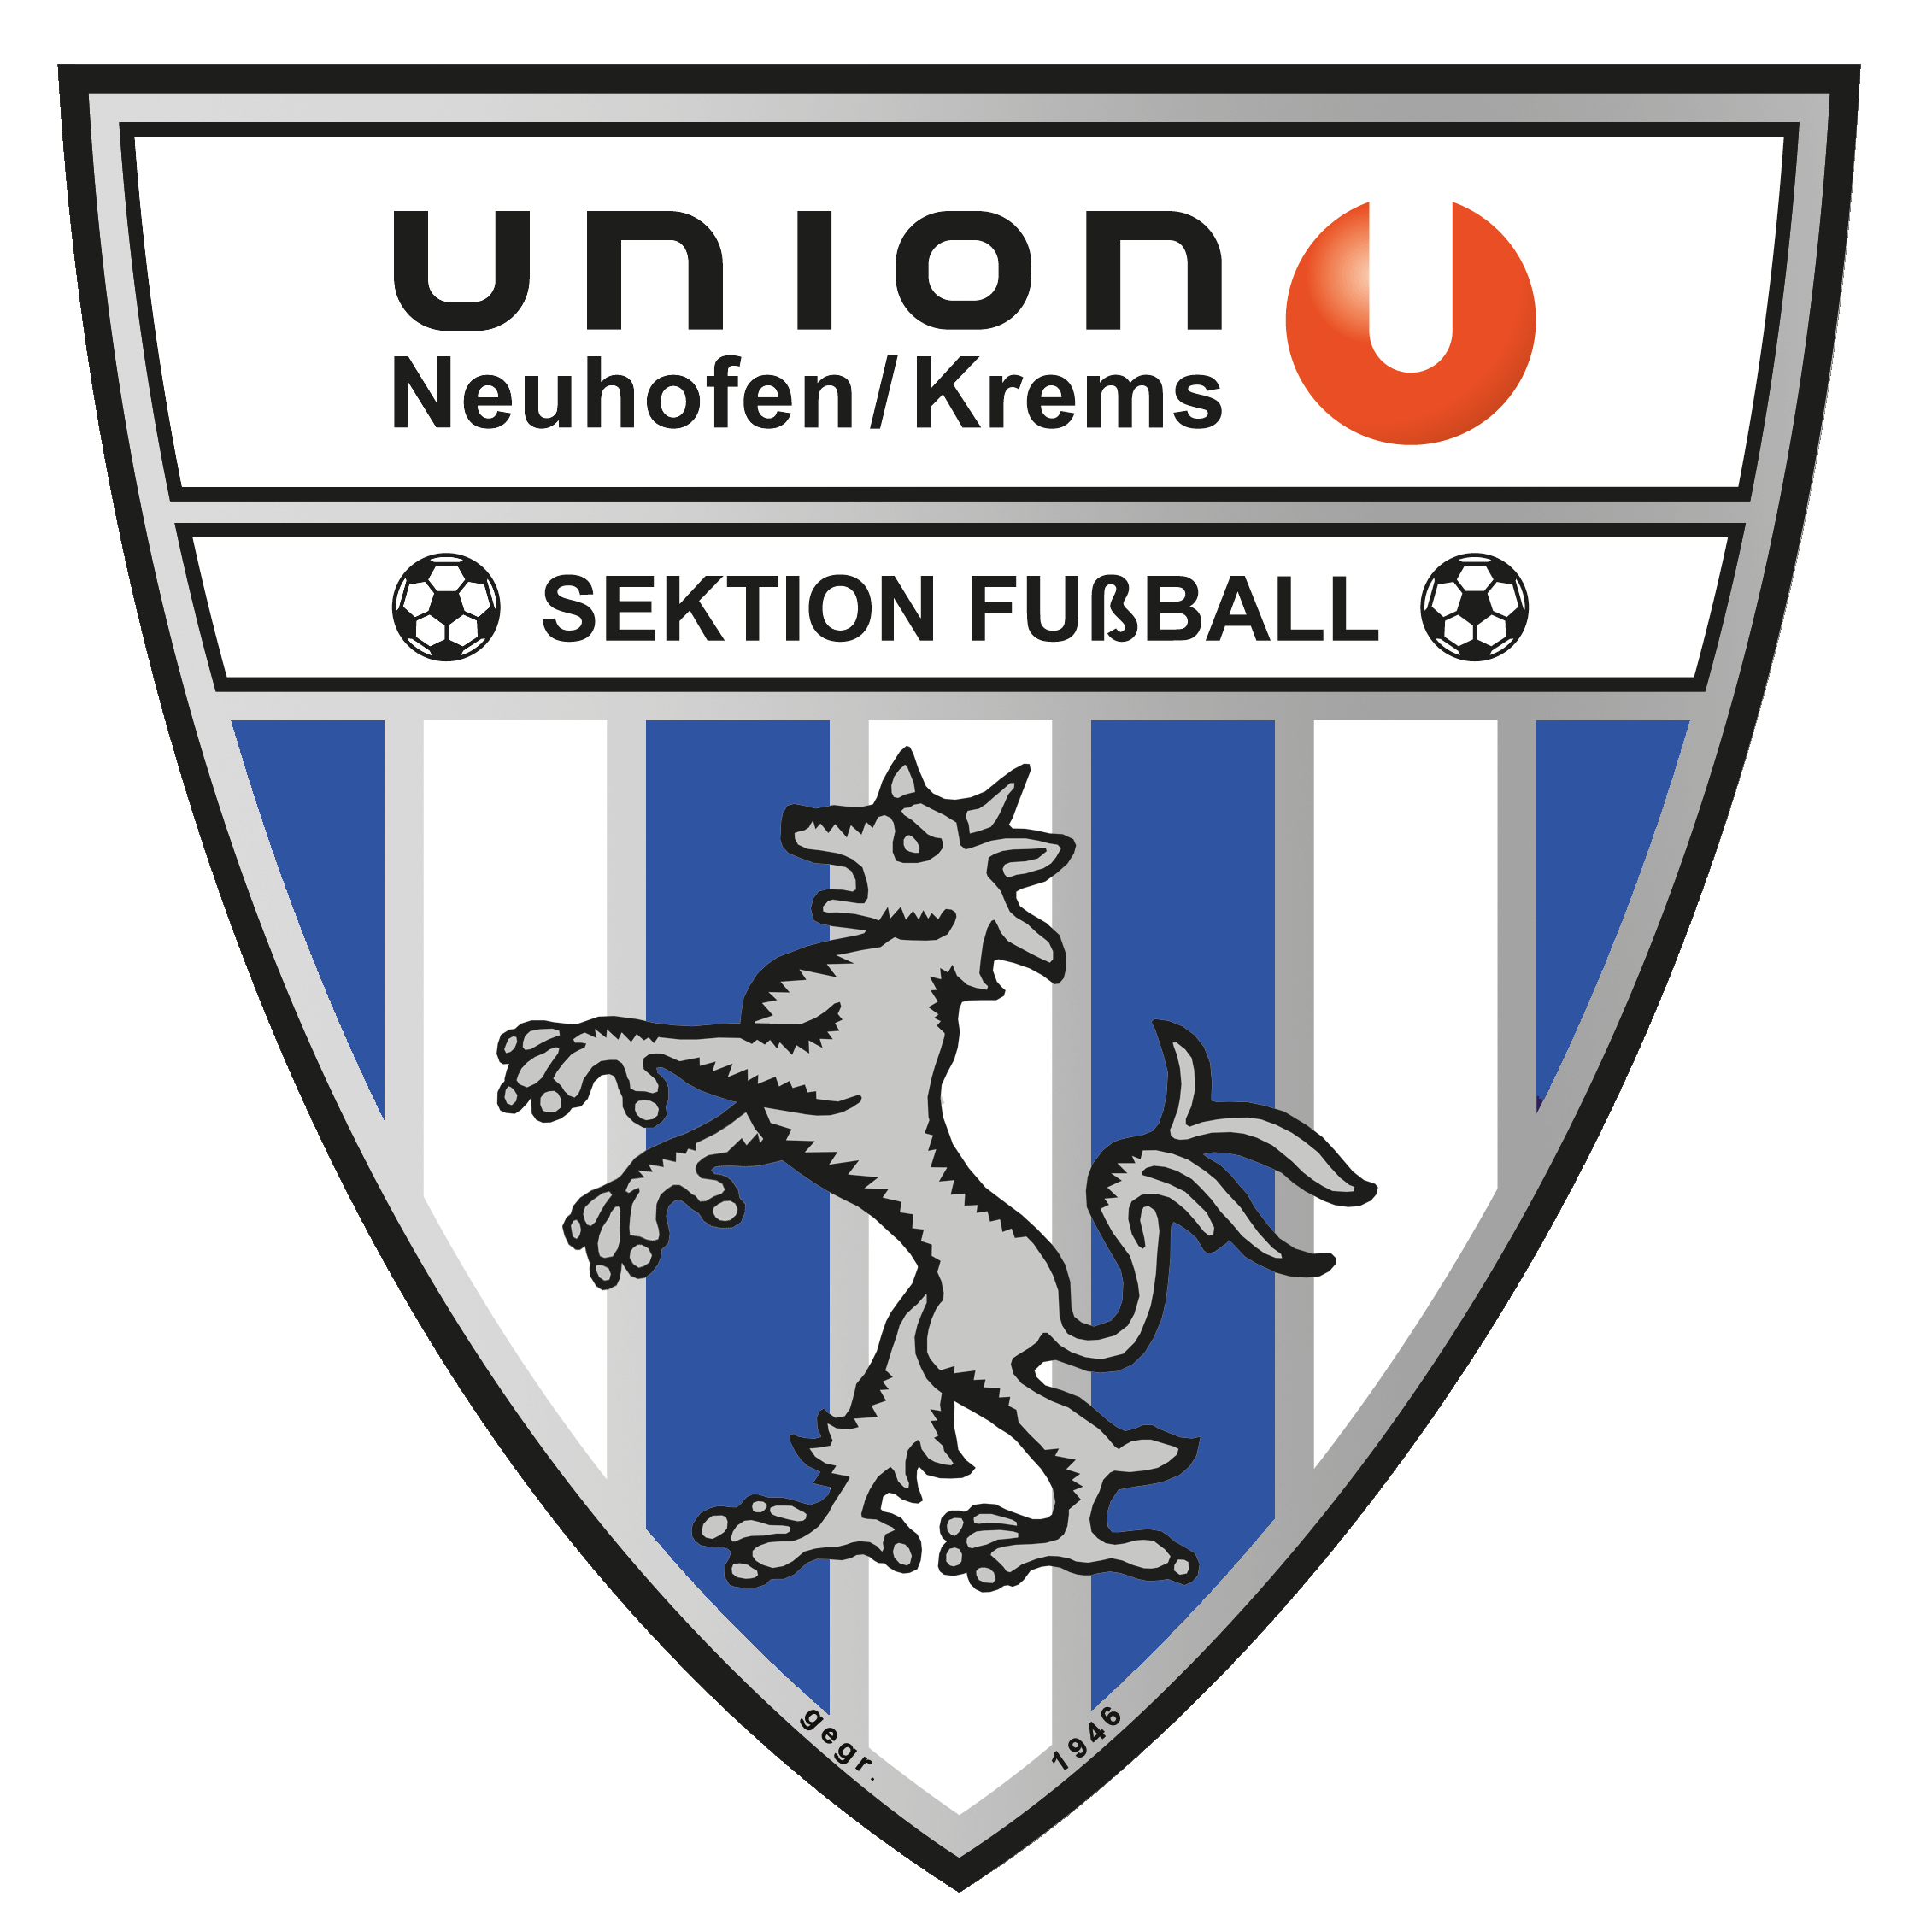 Union Neuhofen - Sektion Fußball